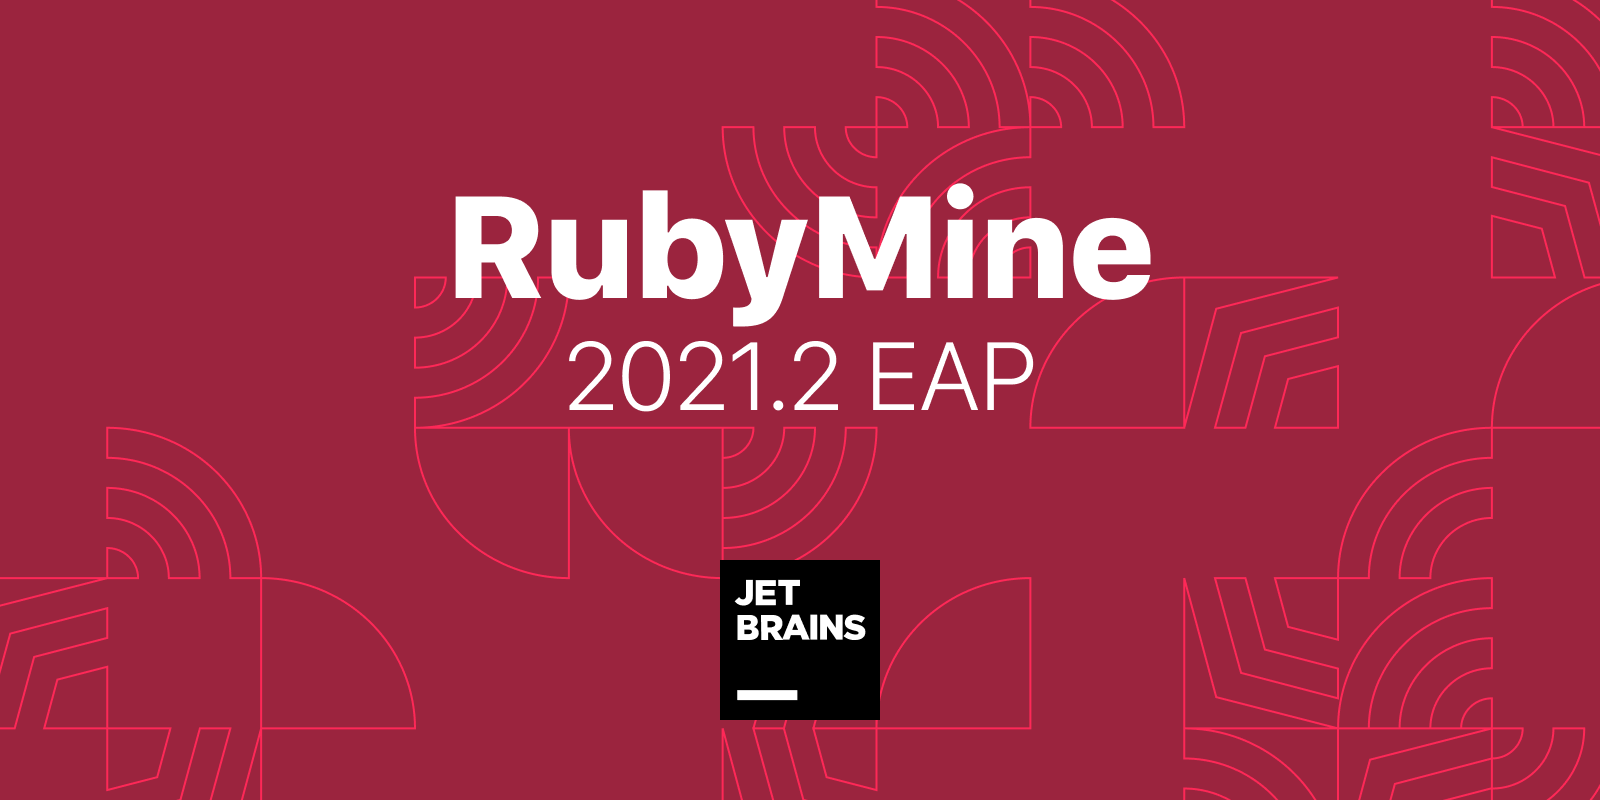 RubyMine 2021.2 EAP